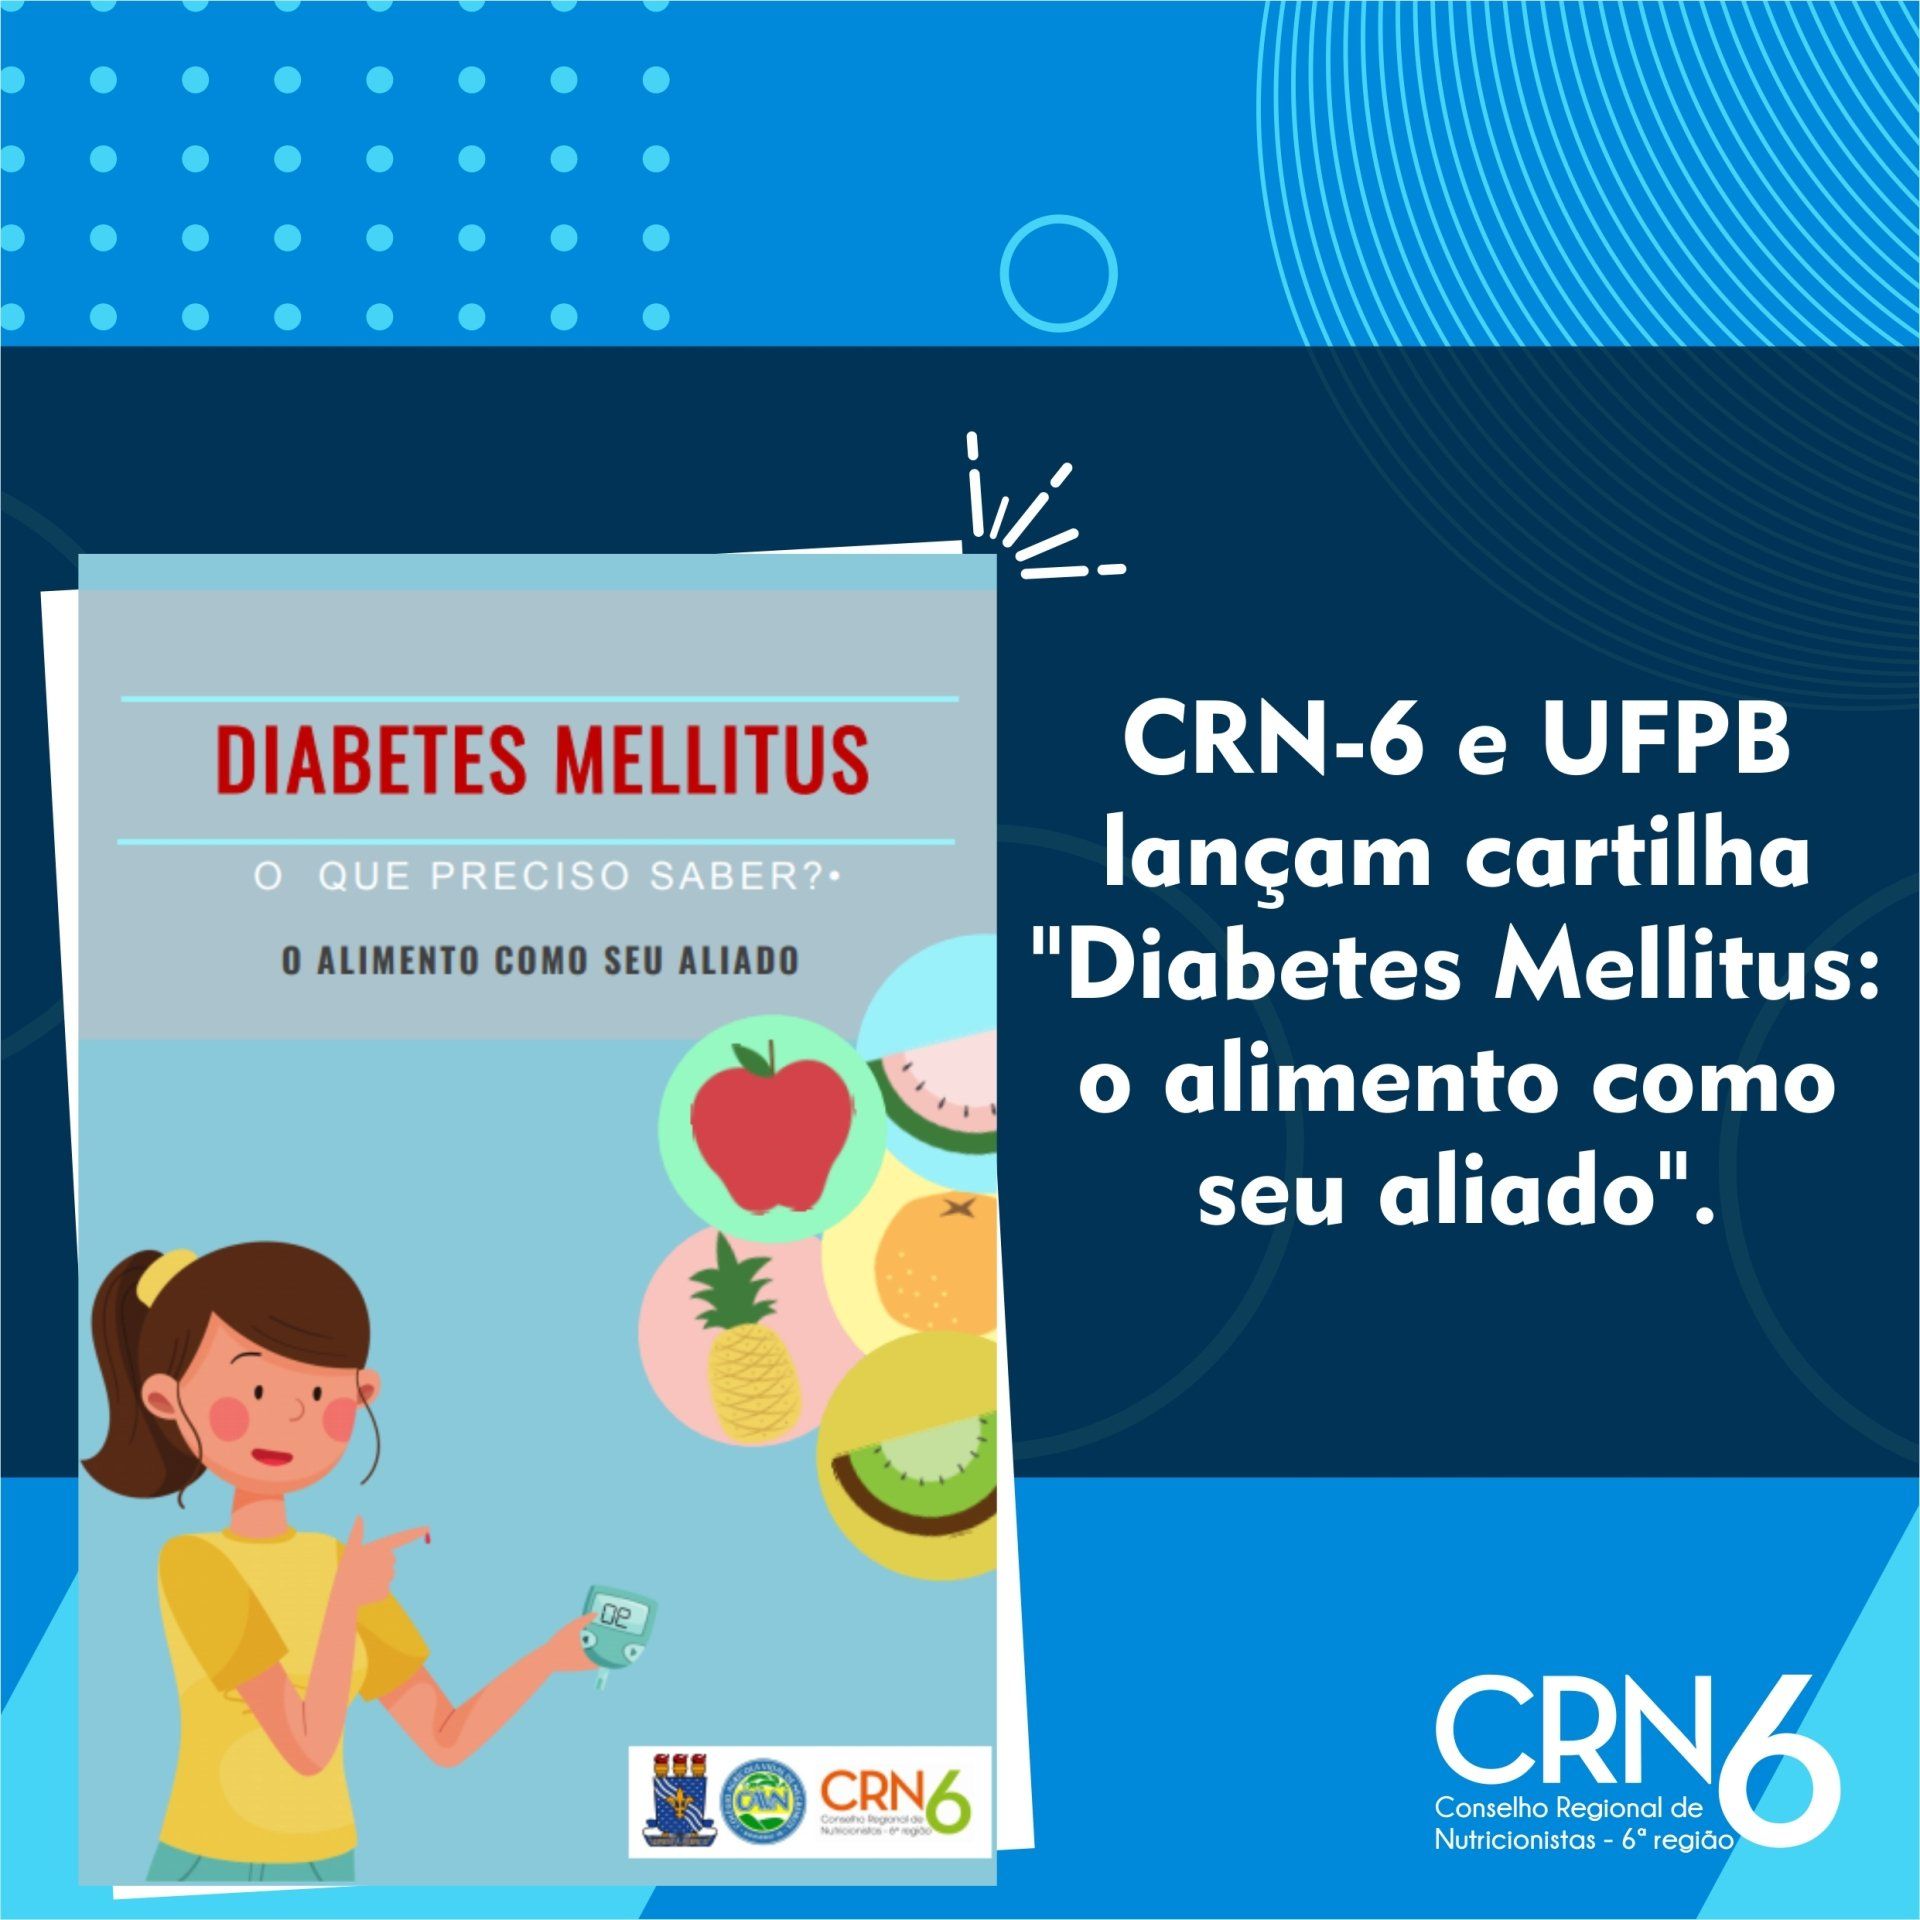 UFPB e CRN lançam cartilha sobre Diabetes Mellitus